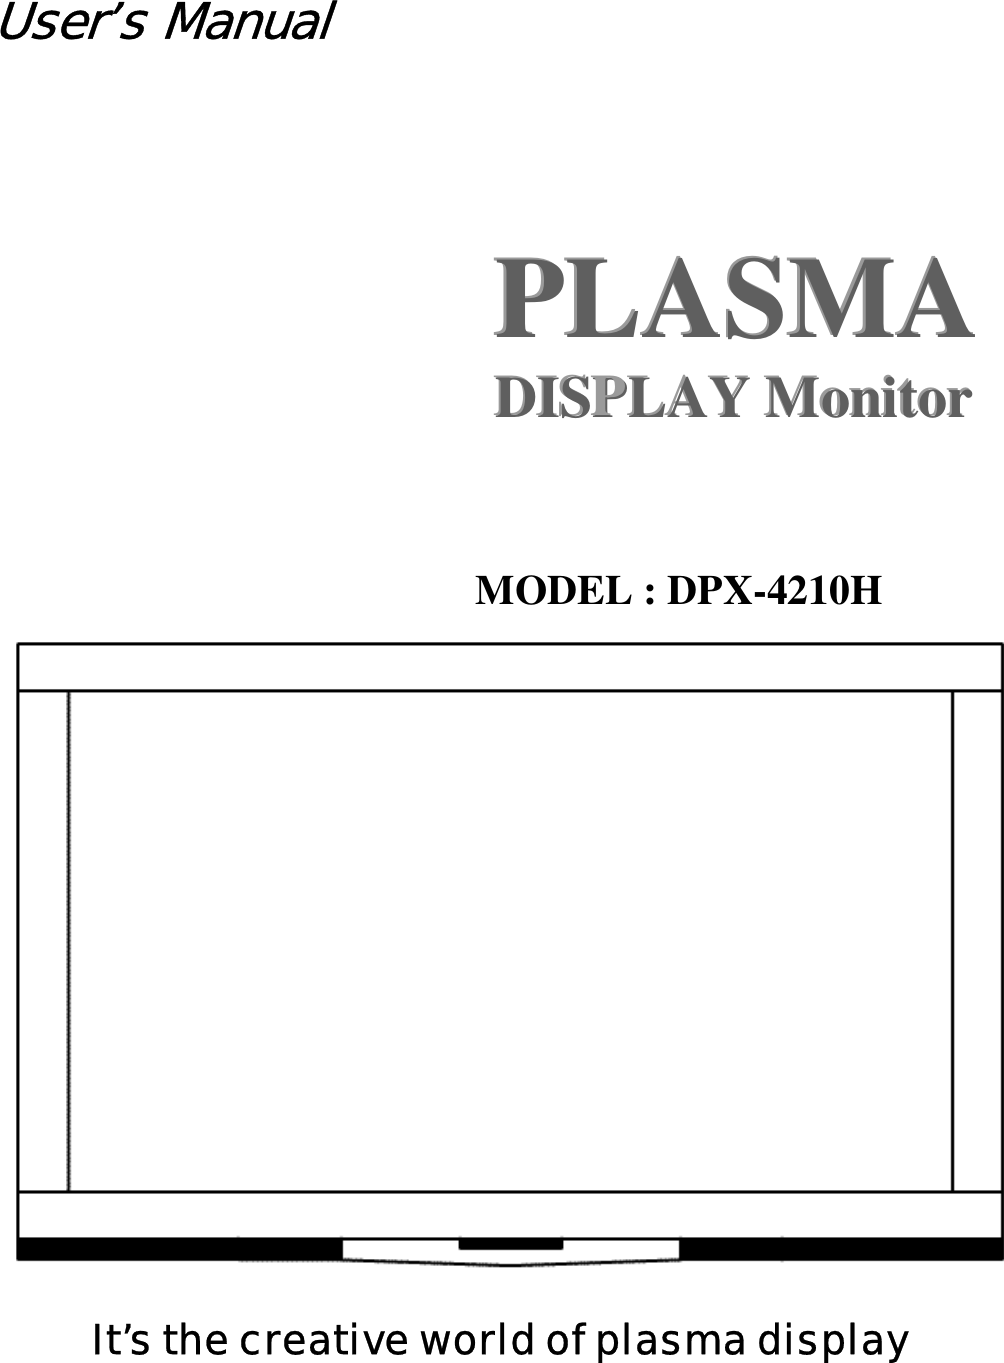 User’s Manual           PLASMA PPLLAASSMMAA         DISPPLAY Monitor               DDIISSPLLAAYY  MMoonniittoorr     MODEL : DPX-4210H    It’s the creative world of plasma display 